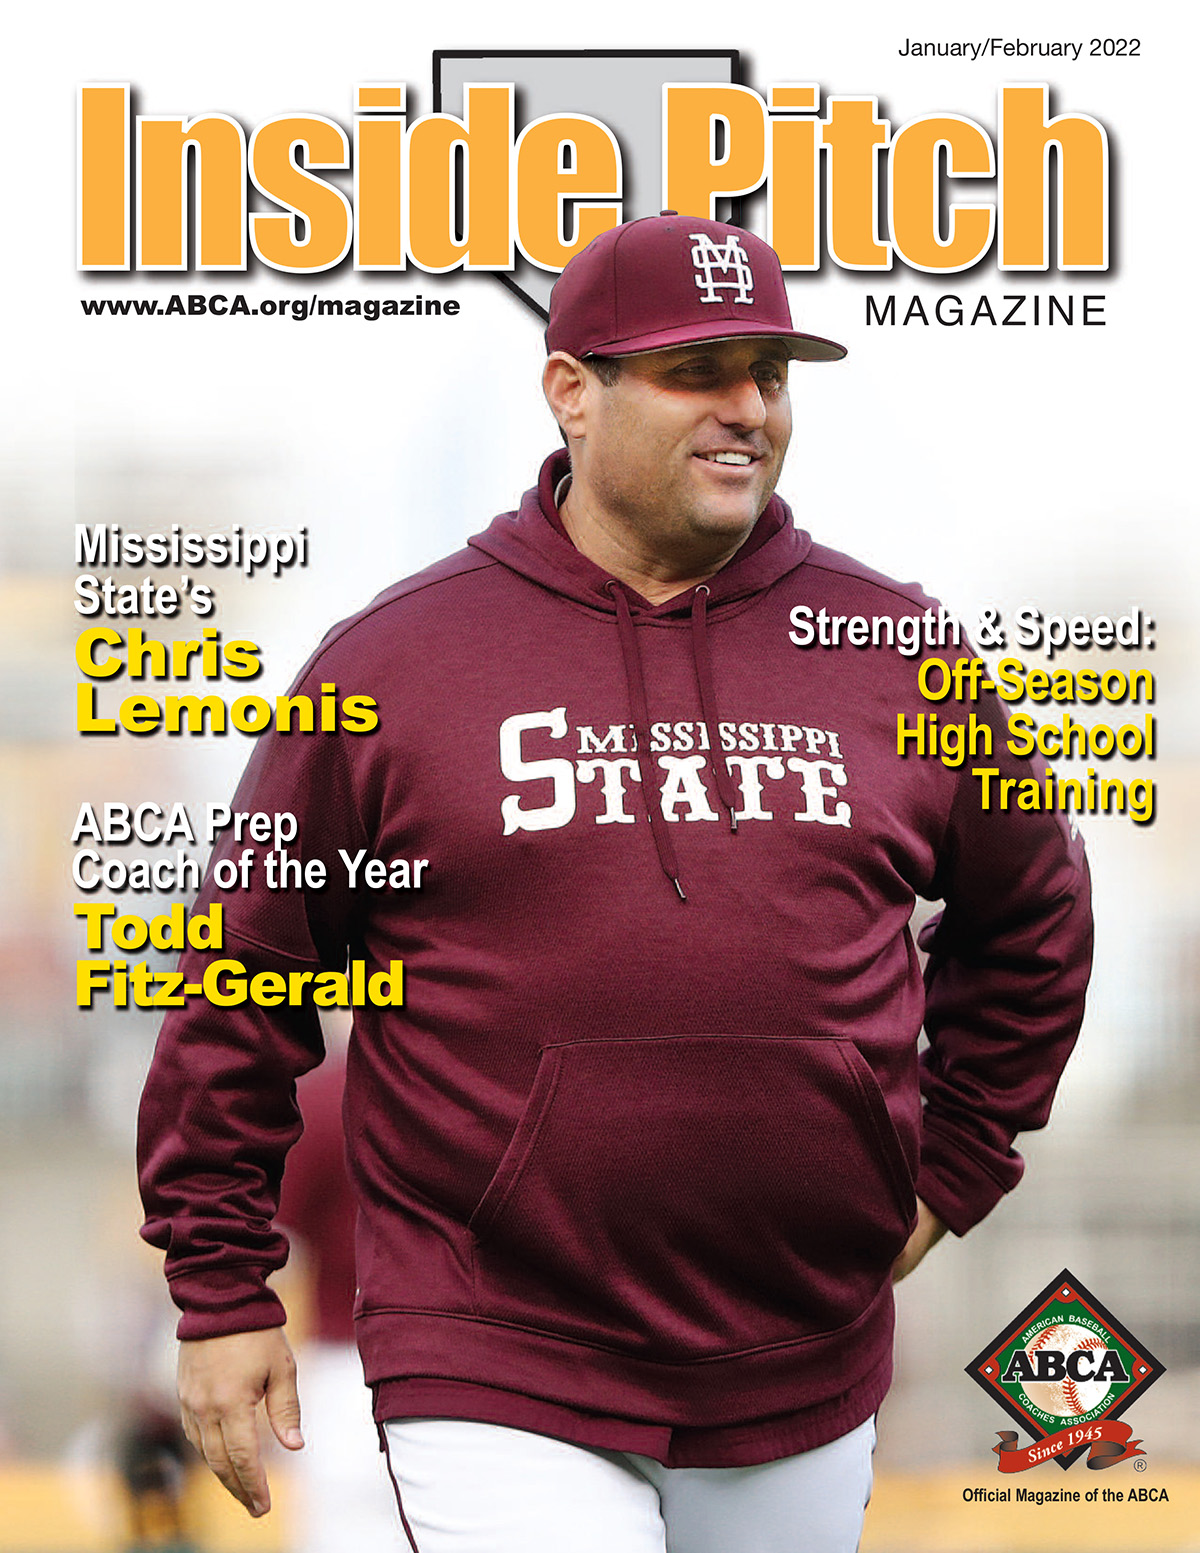 Inside Pitch Magazine Cover with Chris Lemonis